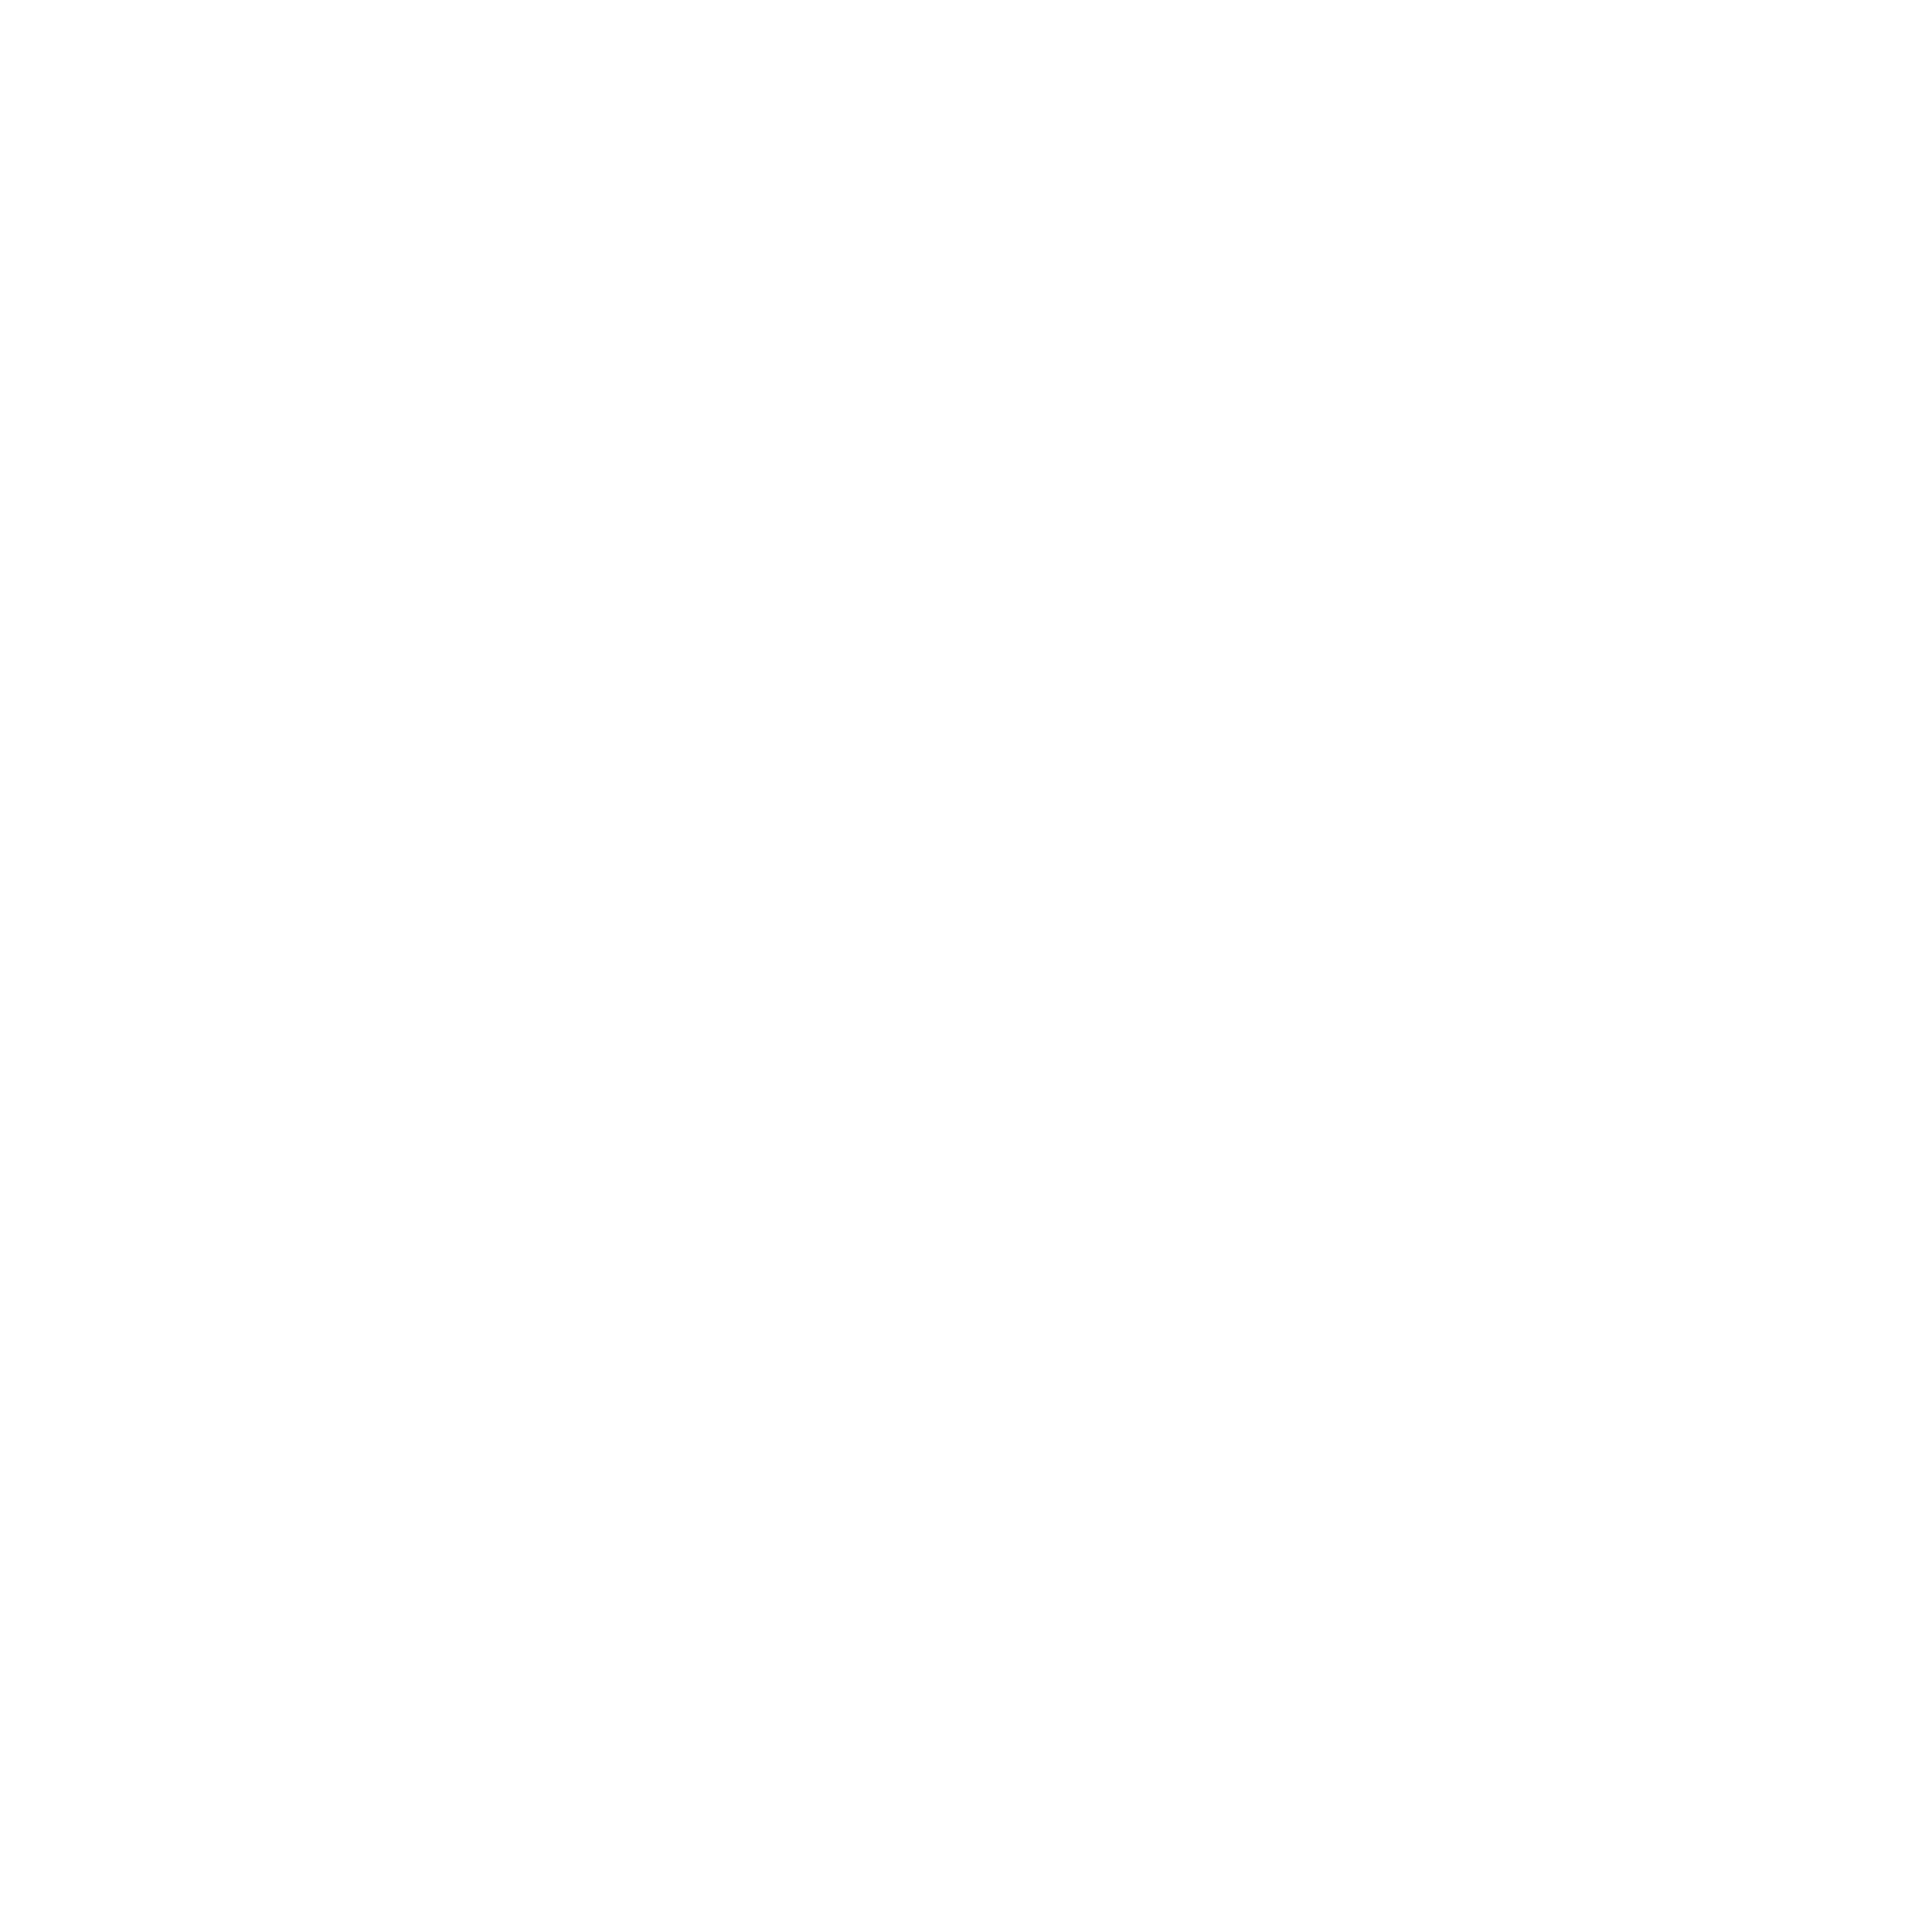 Hart-logos-black-trans12.png